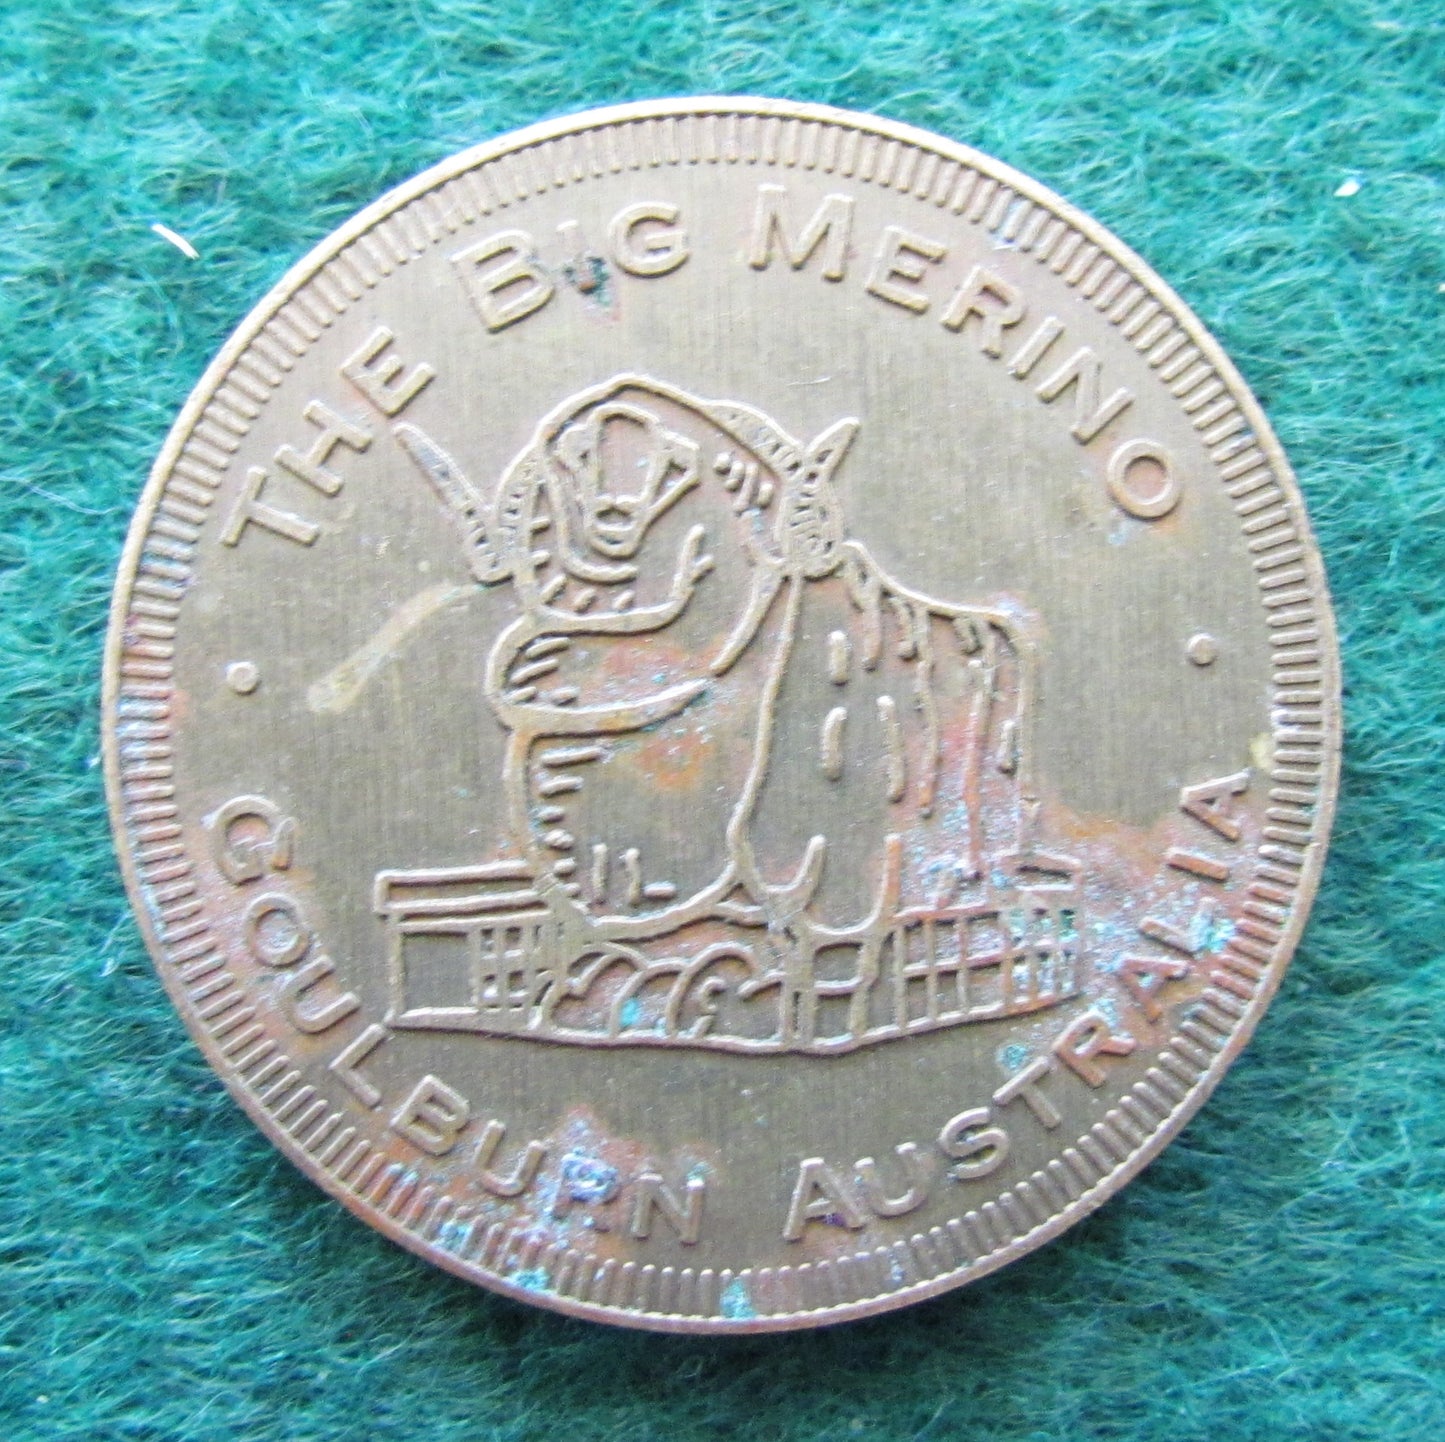 The Big Merino Goulburn Australia 2010 Souvenir Coin